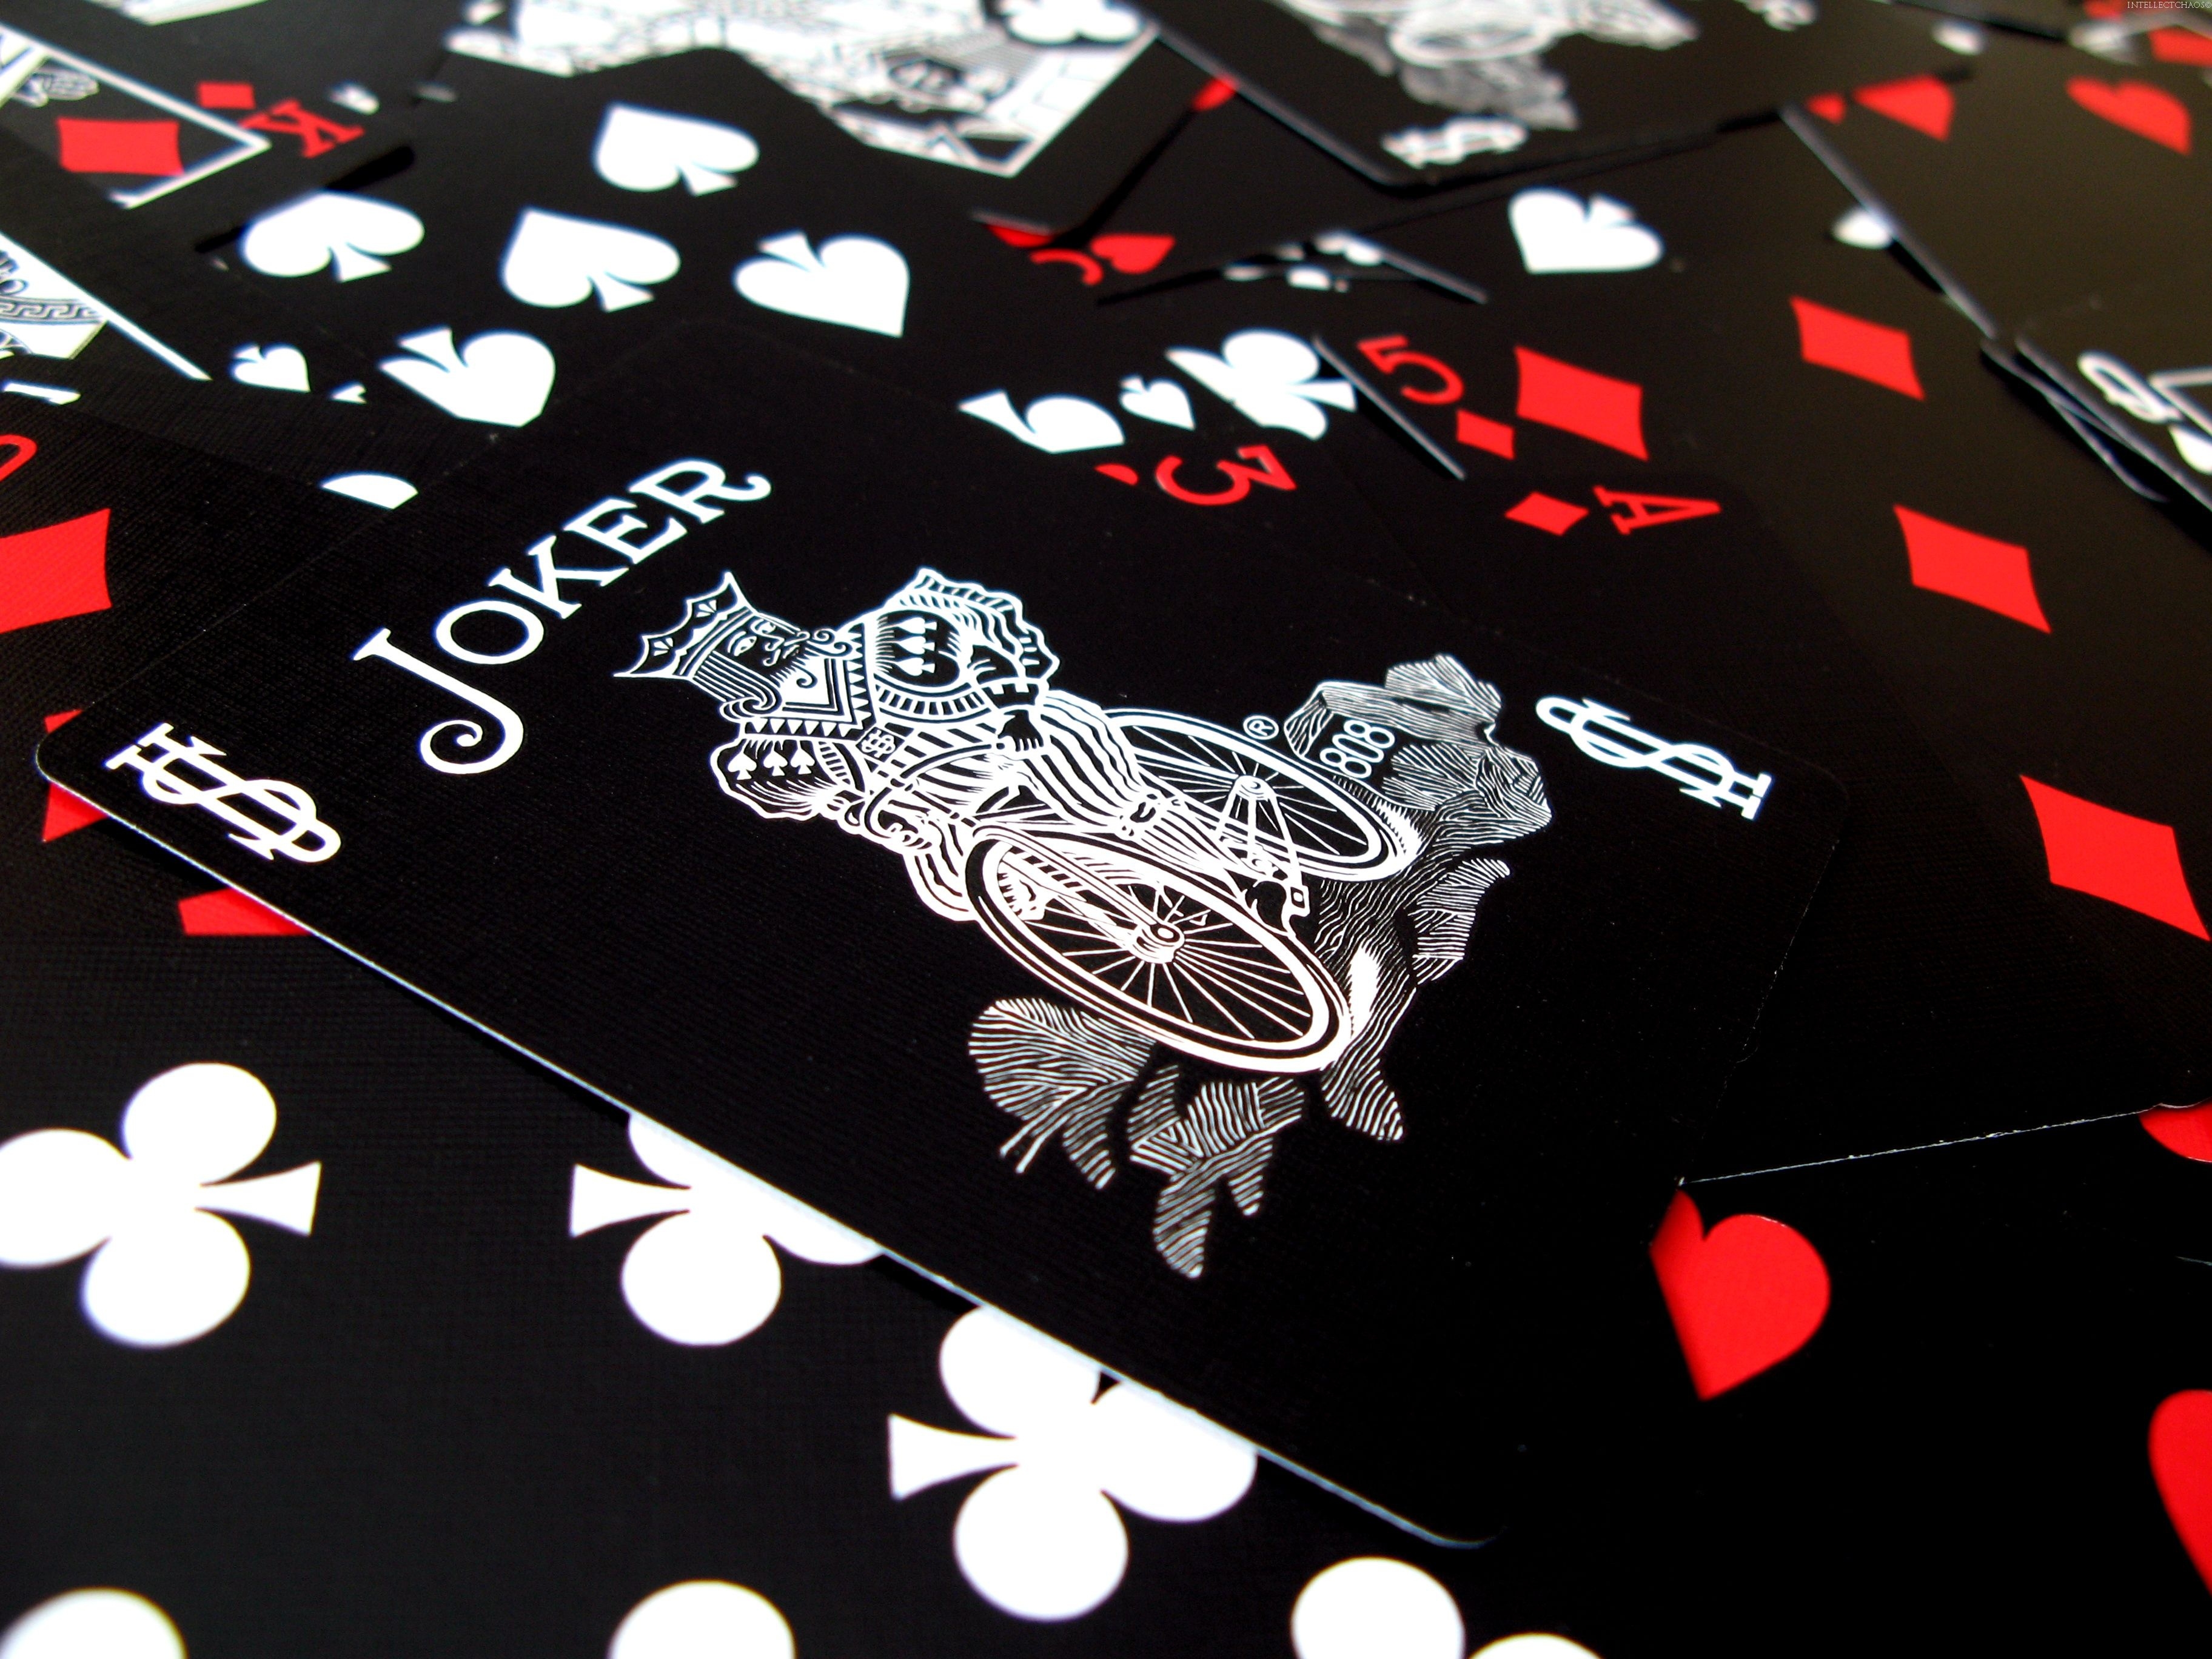 Free photo Joker card in black